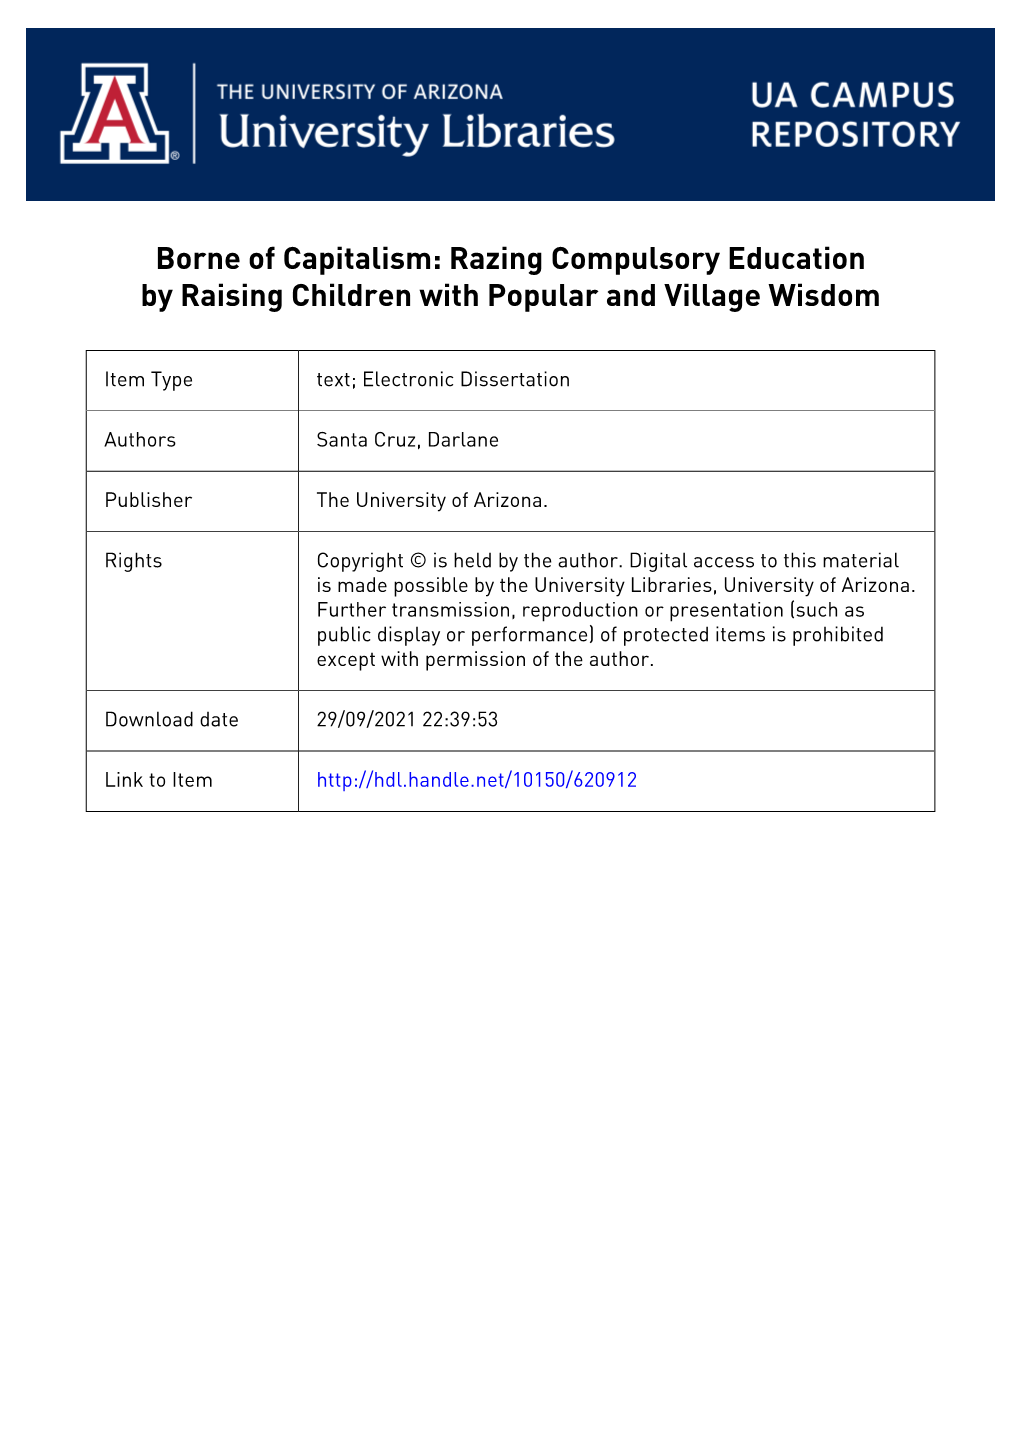 Borne of Capitalism: Razing Compulsory Education by Raising Children with Popular and Village Wisdom